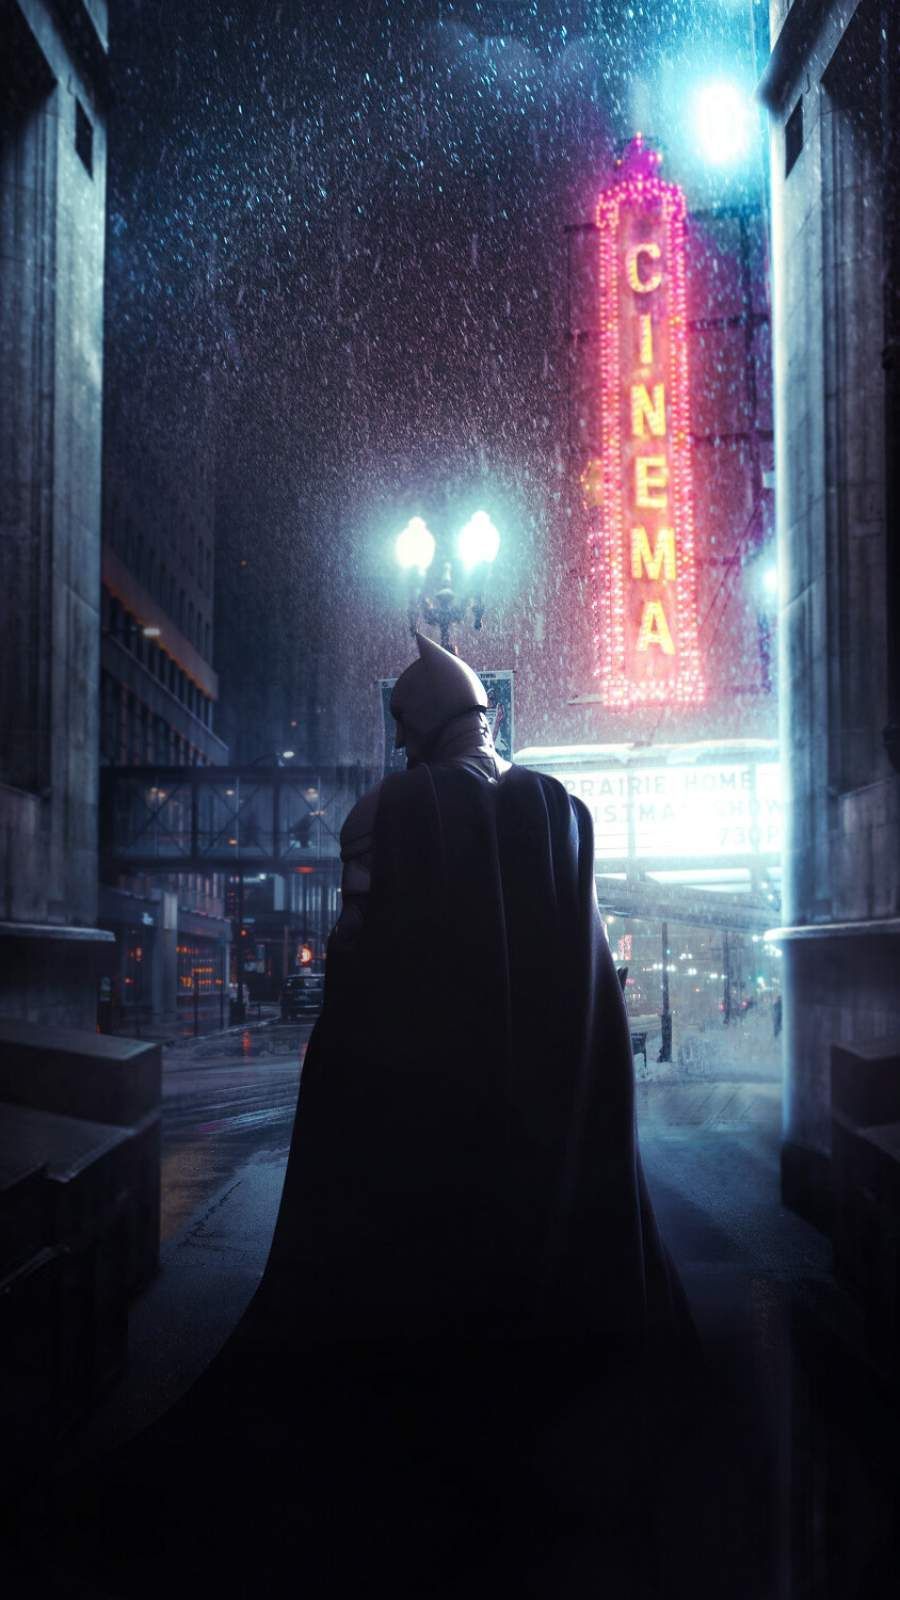 The Batman 2022 Movie Wallpaper iPhone Phone 4K #6840e